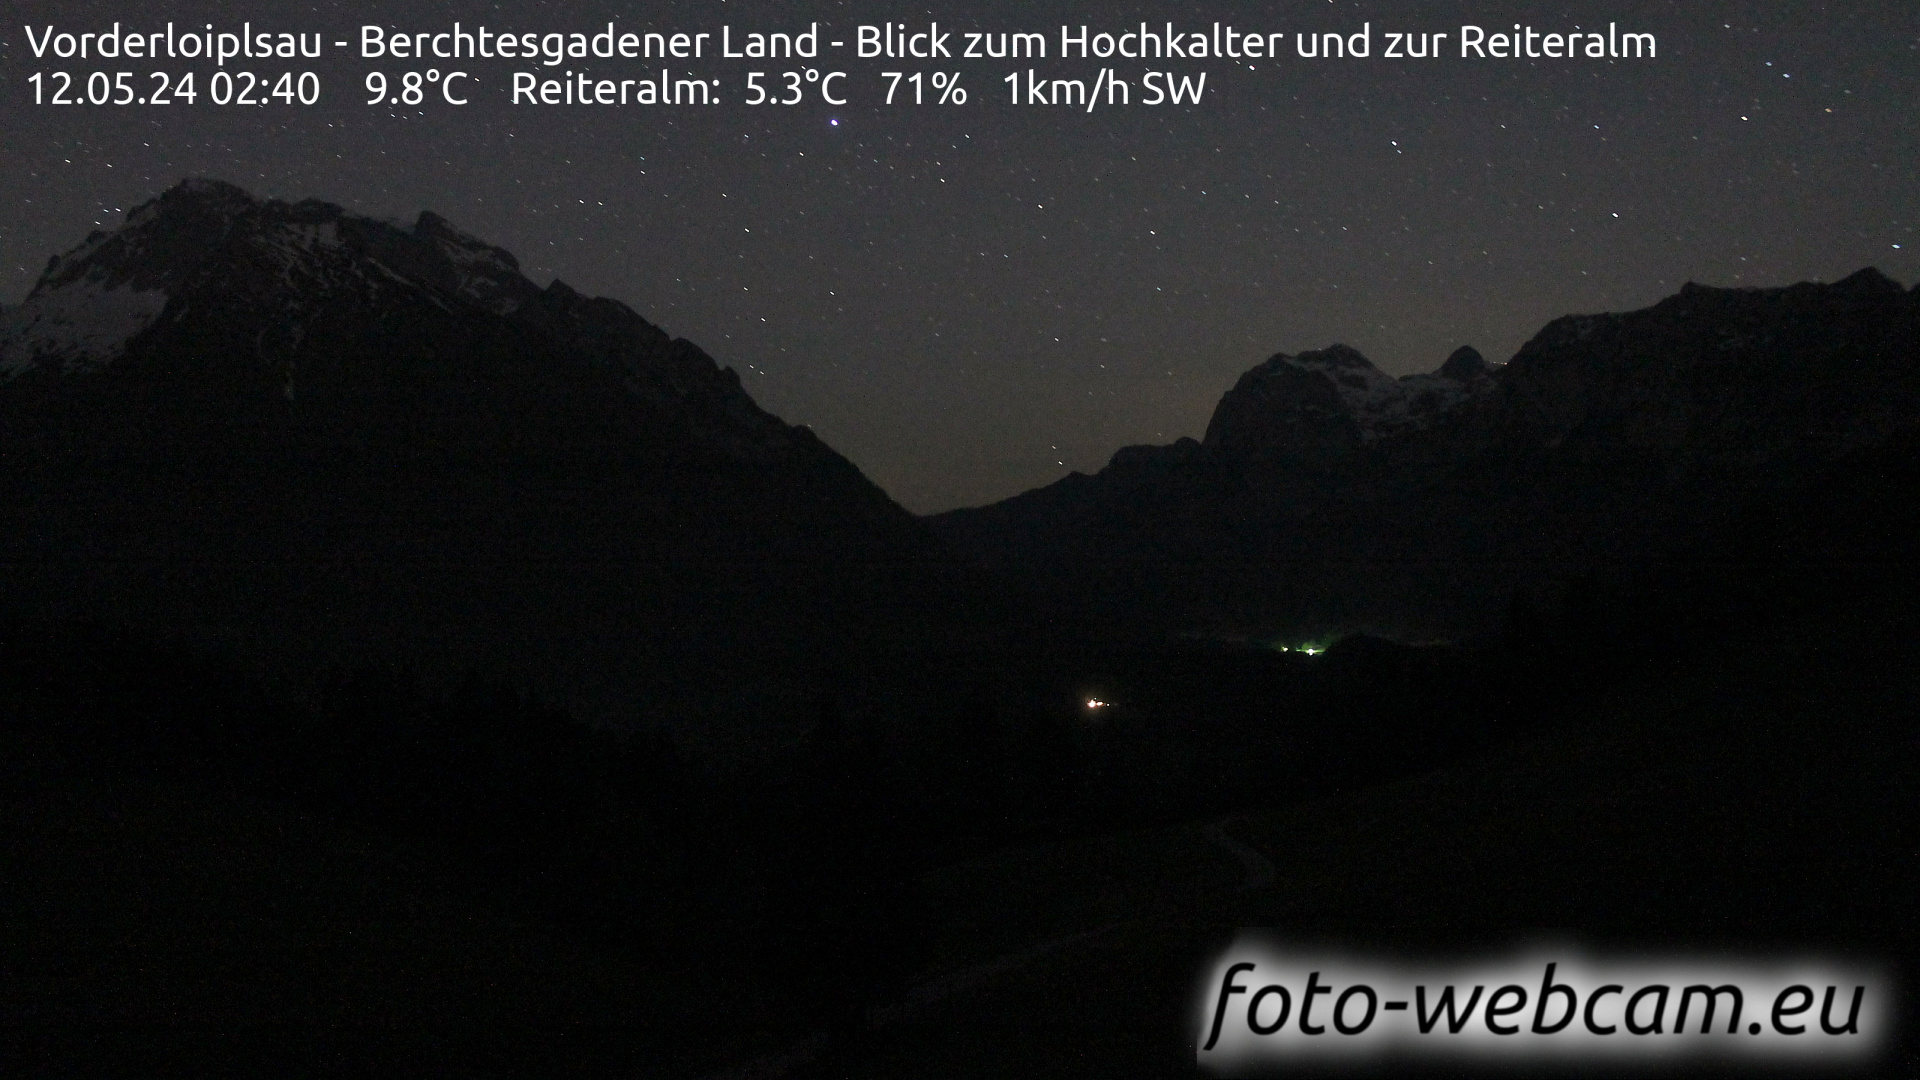 Ramsau bei Berchtesgaden Jue. 02:48